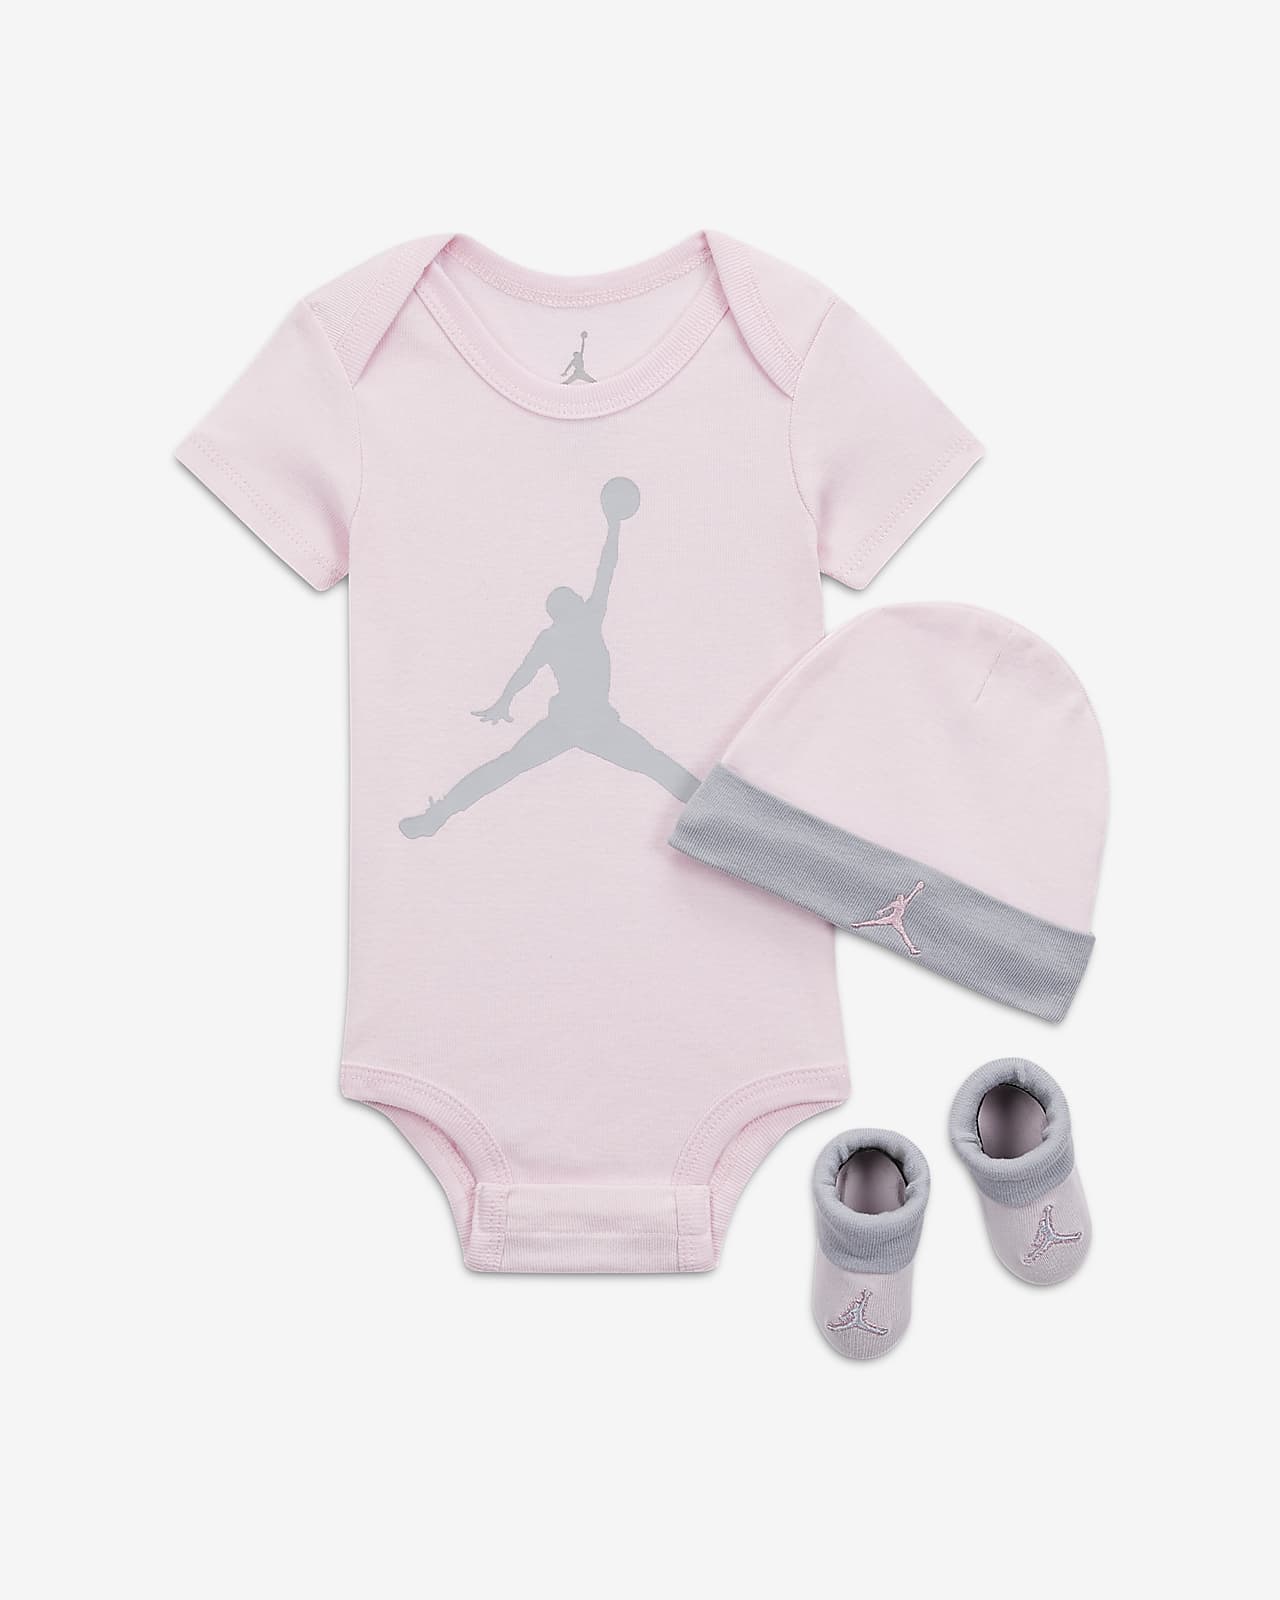 Antagelse søvn Sway Jordan Baby 3-Piece Box Set. Nike LU